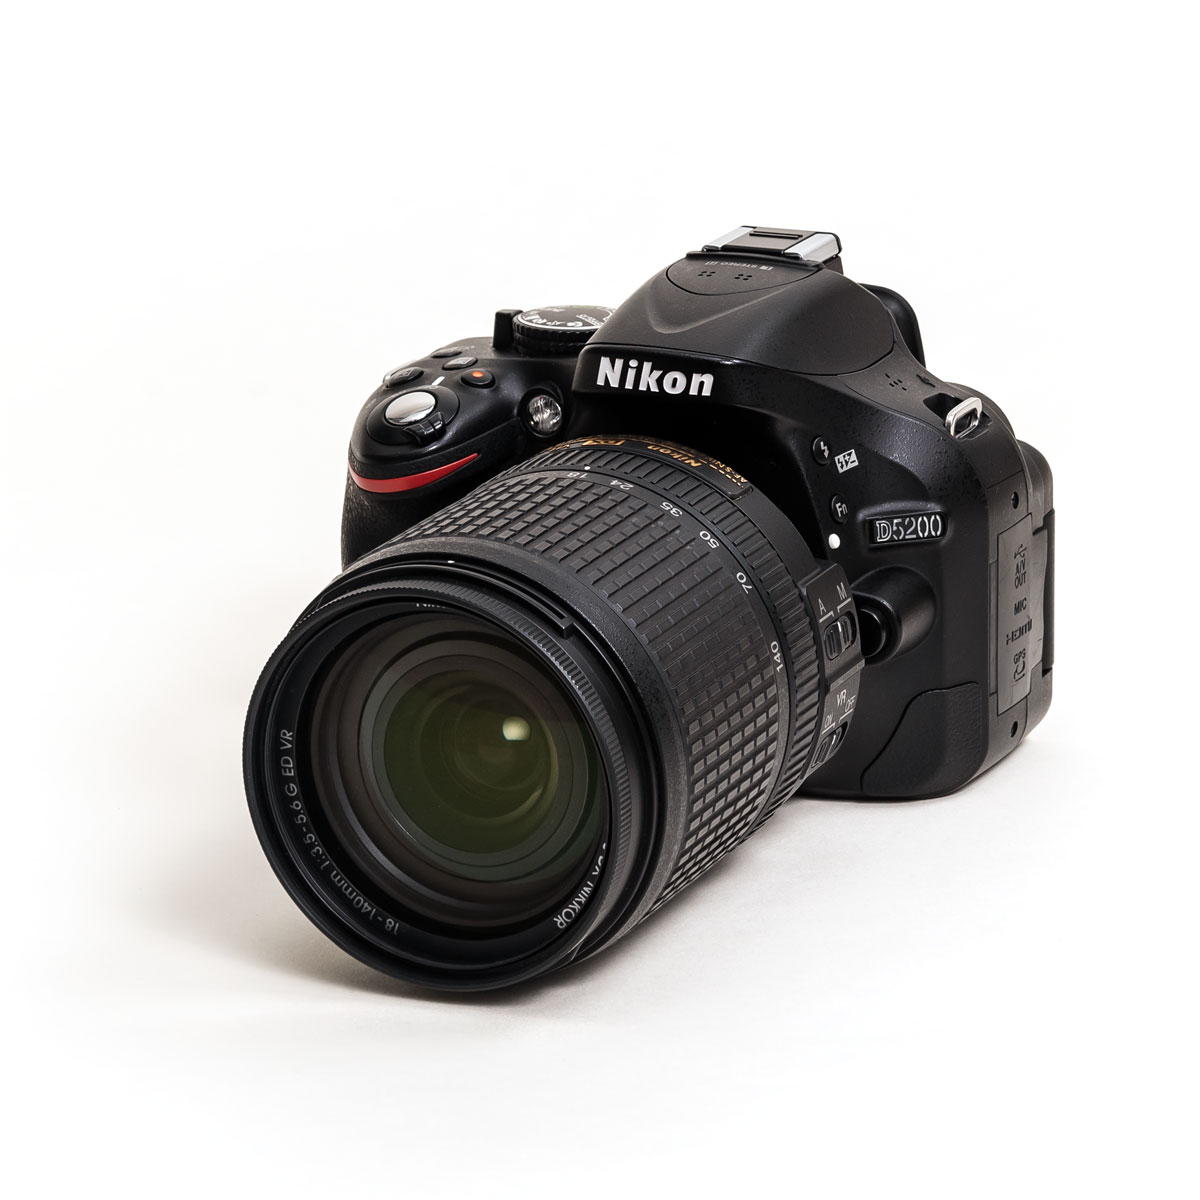 Nikon D5200 camera image